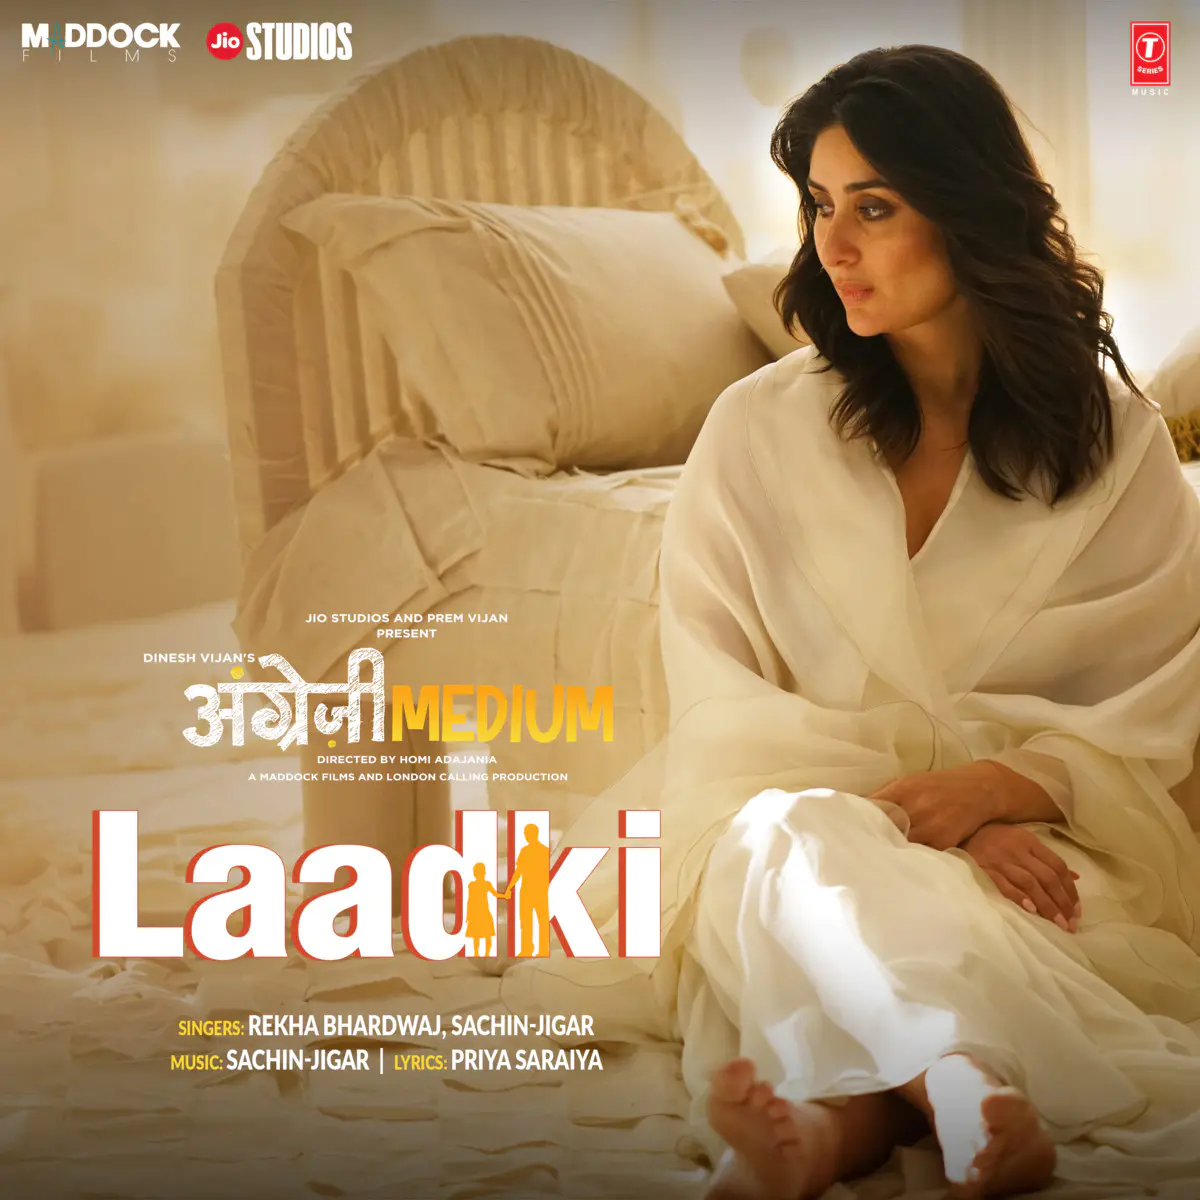 Laadki Lyrics In Hindi Angrezi Medium Laadki Song Lyrics In English Free Online On Gaana Com